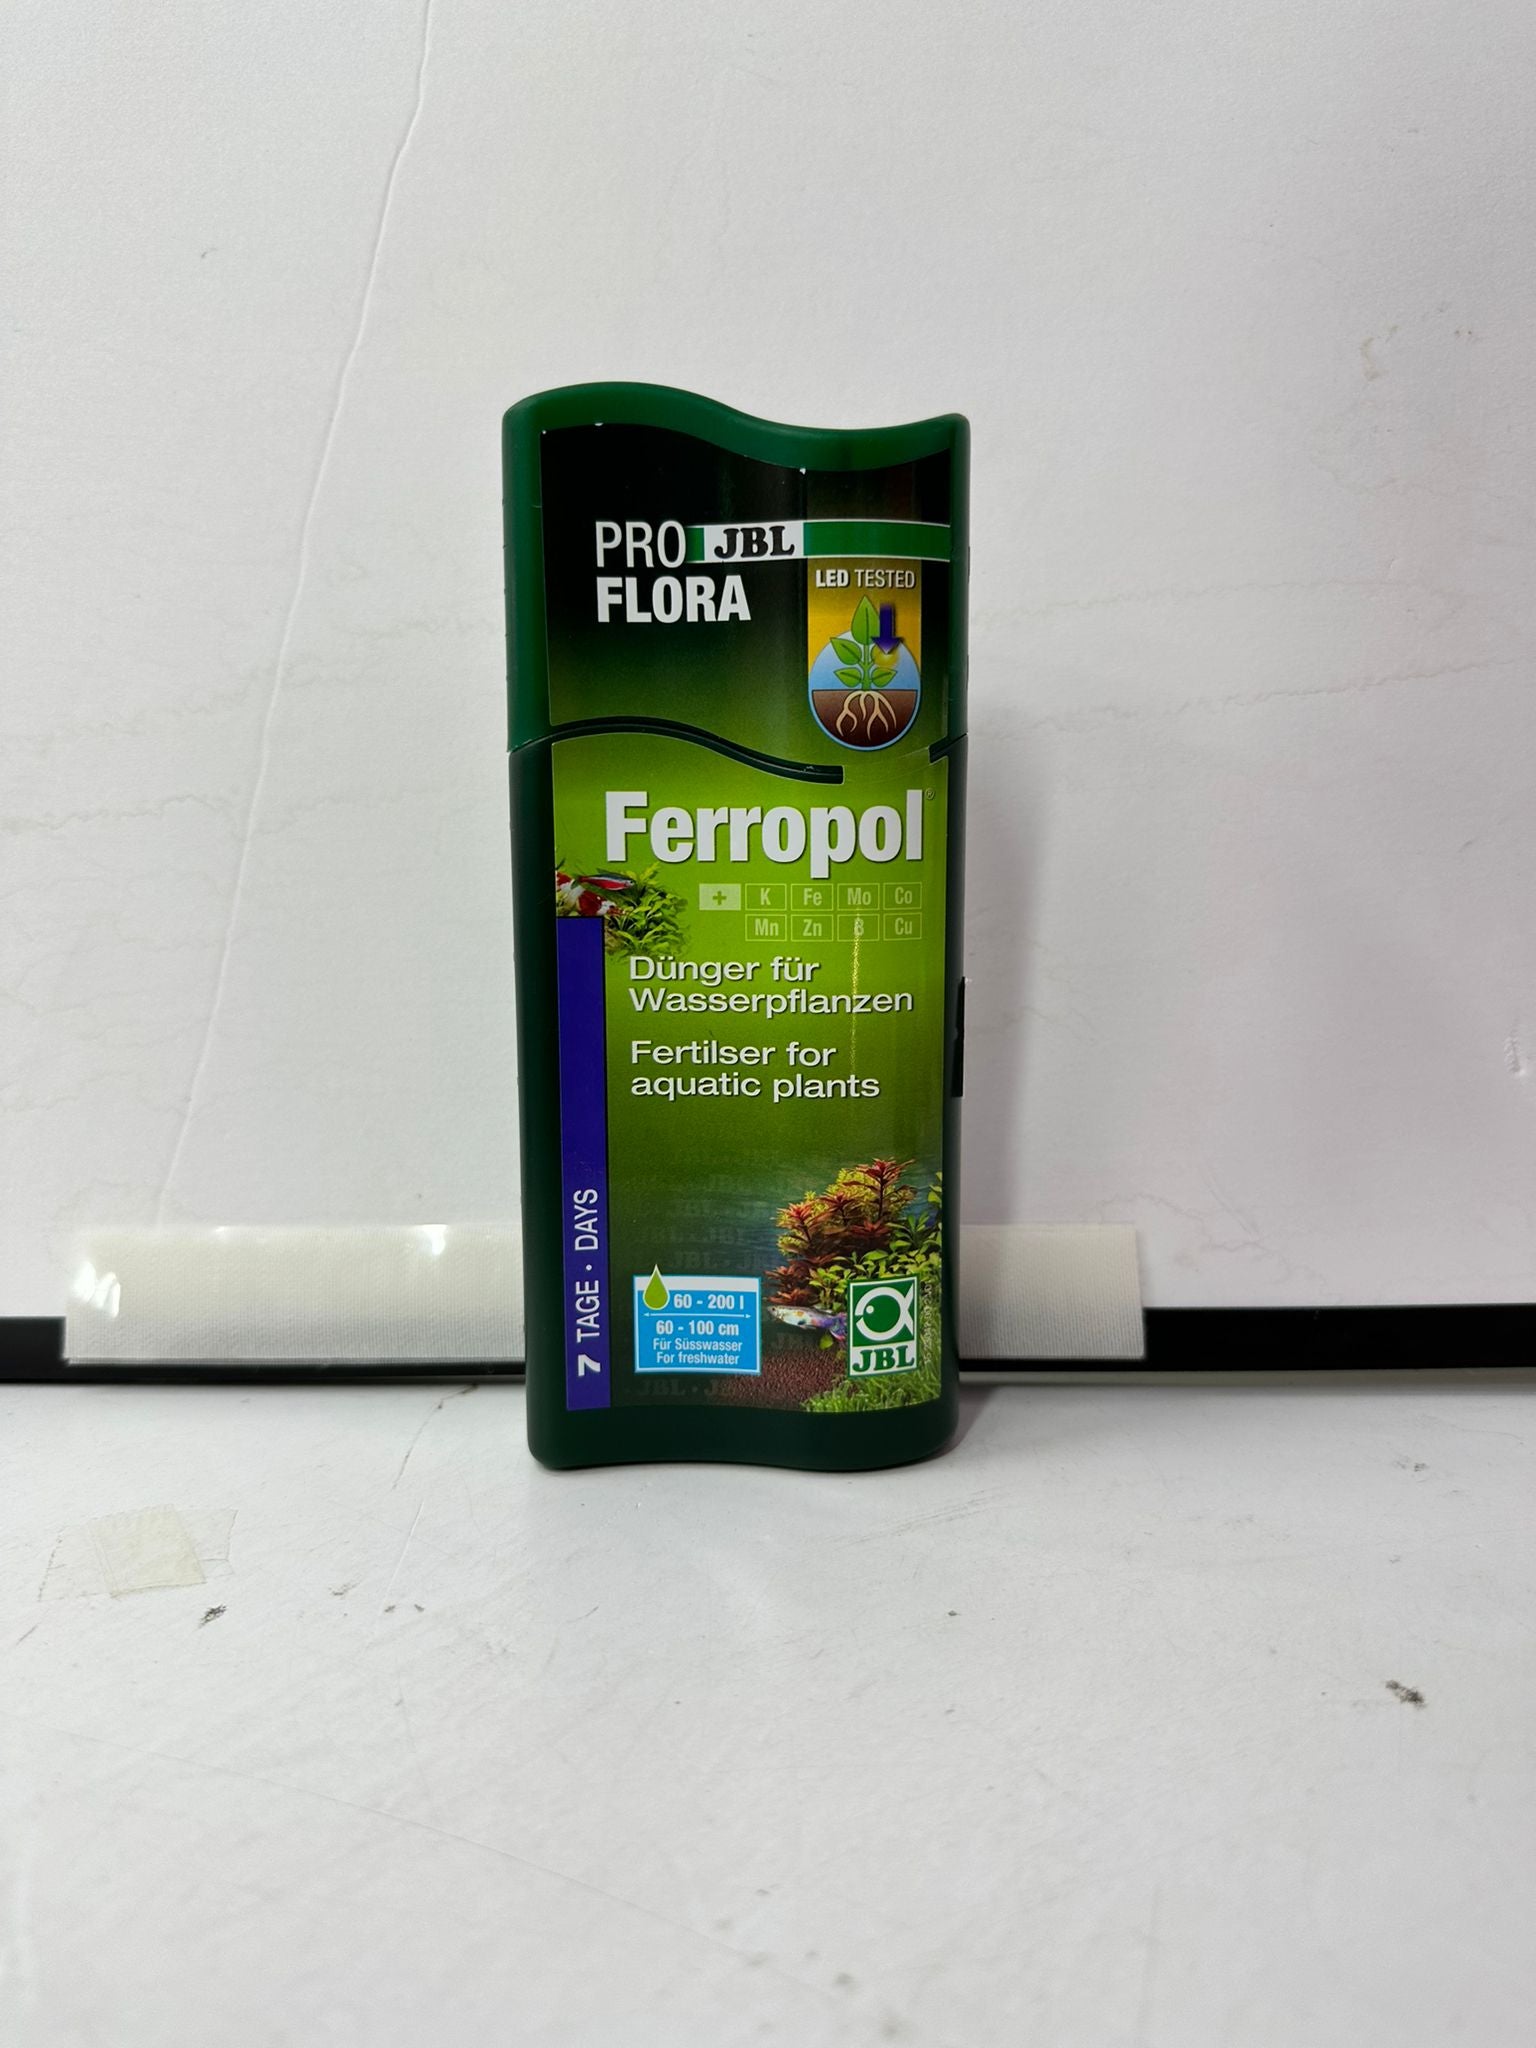 JBL Pro Flora Ferropol (Options Available)